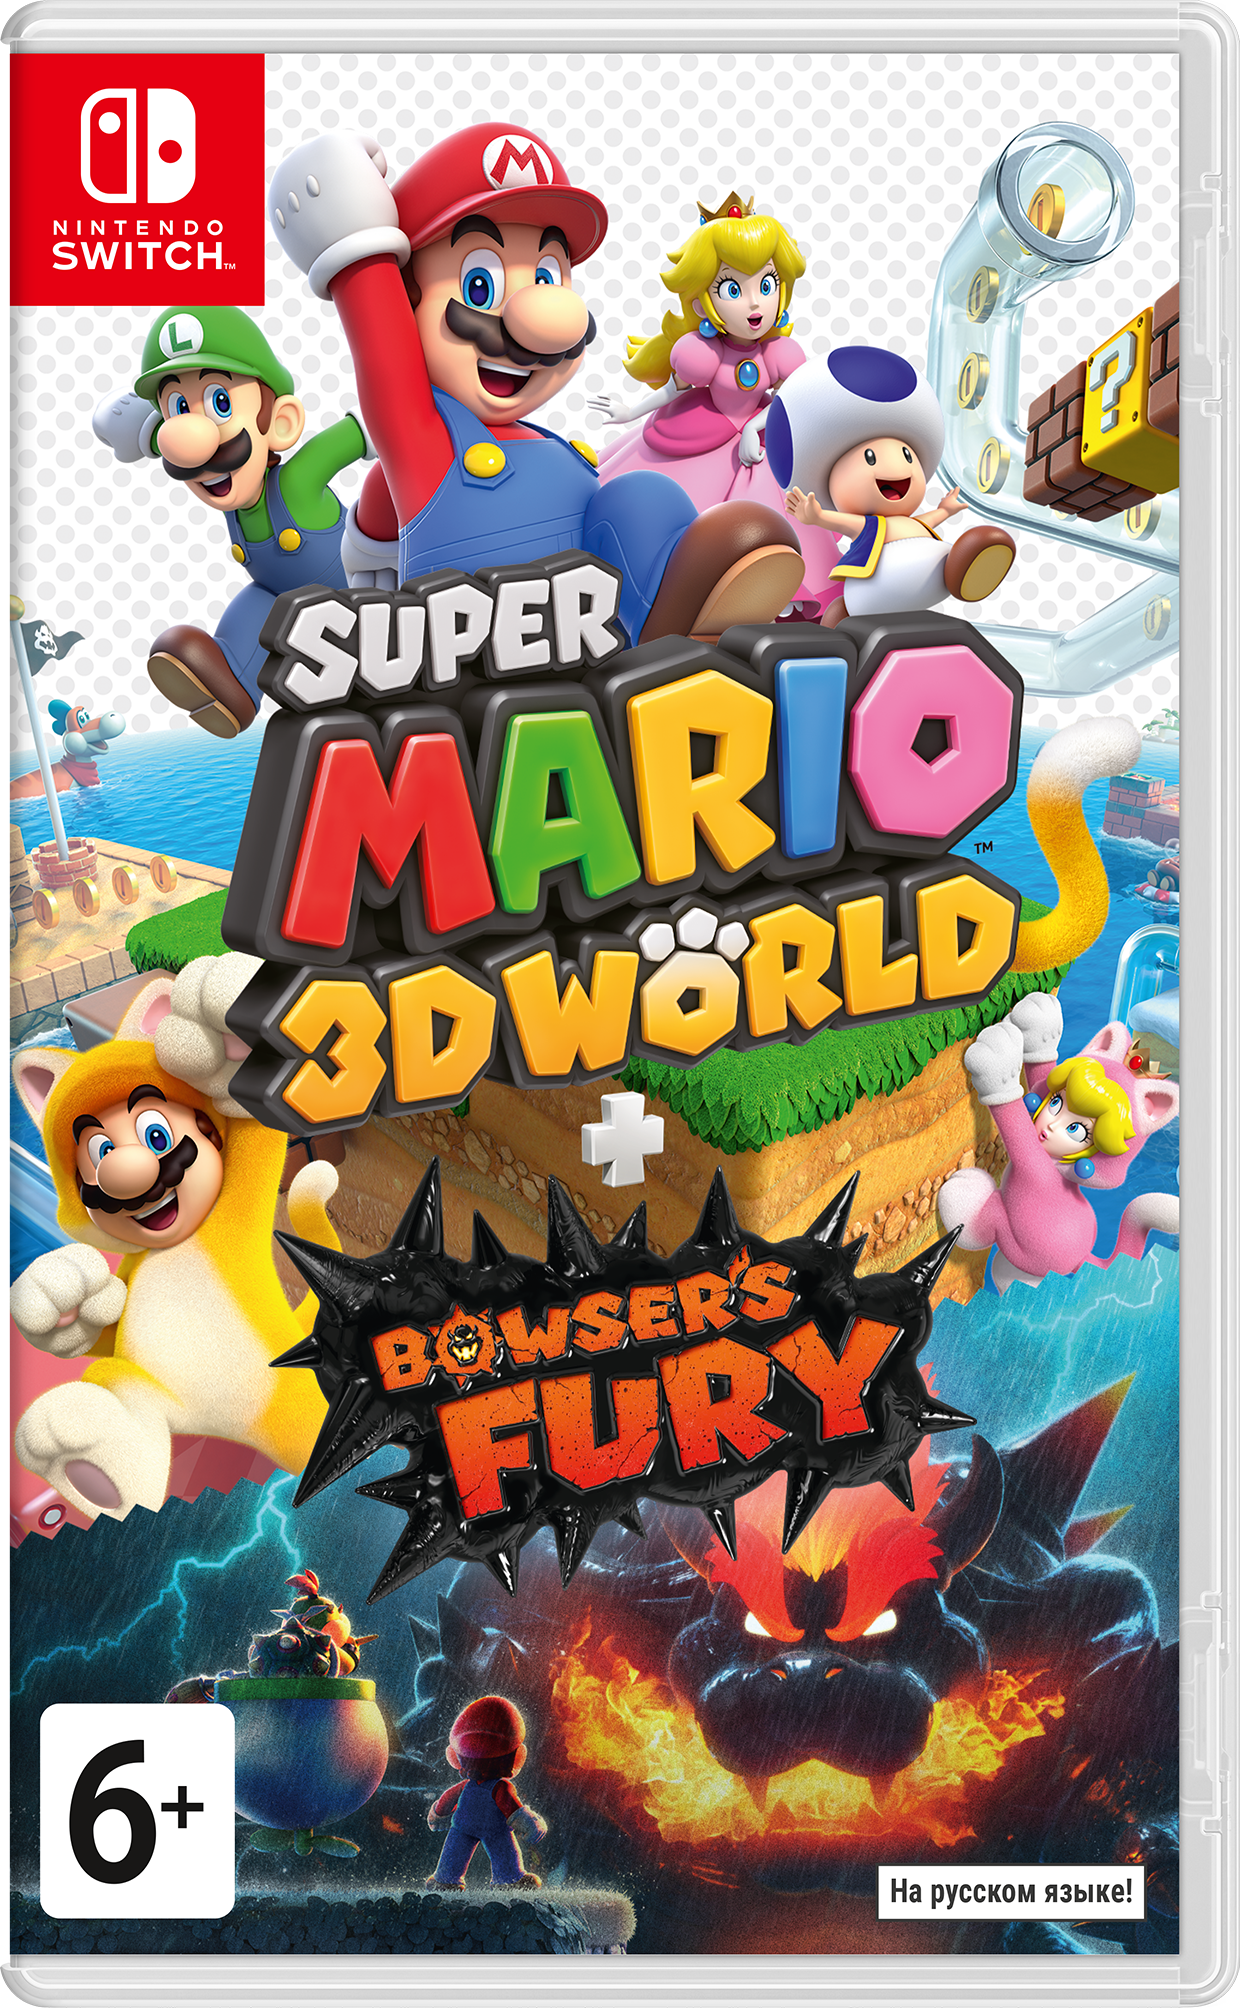 Super mario bowser fury. Super Mario 3d World Nintendo Switch. Super Mario 3d World + Bowser's Fury. Super Mario 3d World Bowser's Fury Nintendo Switch. Super Mario World: 3д.